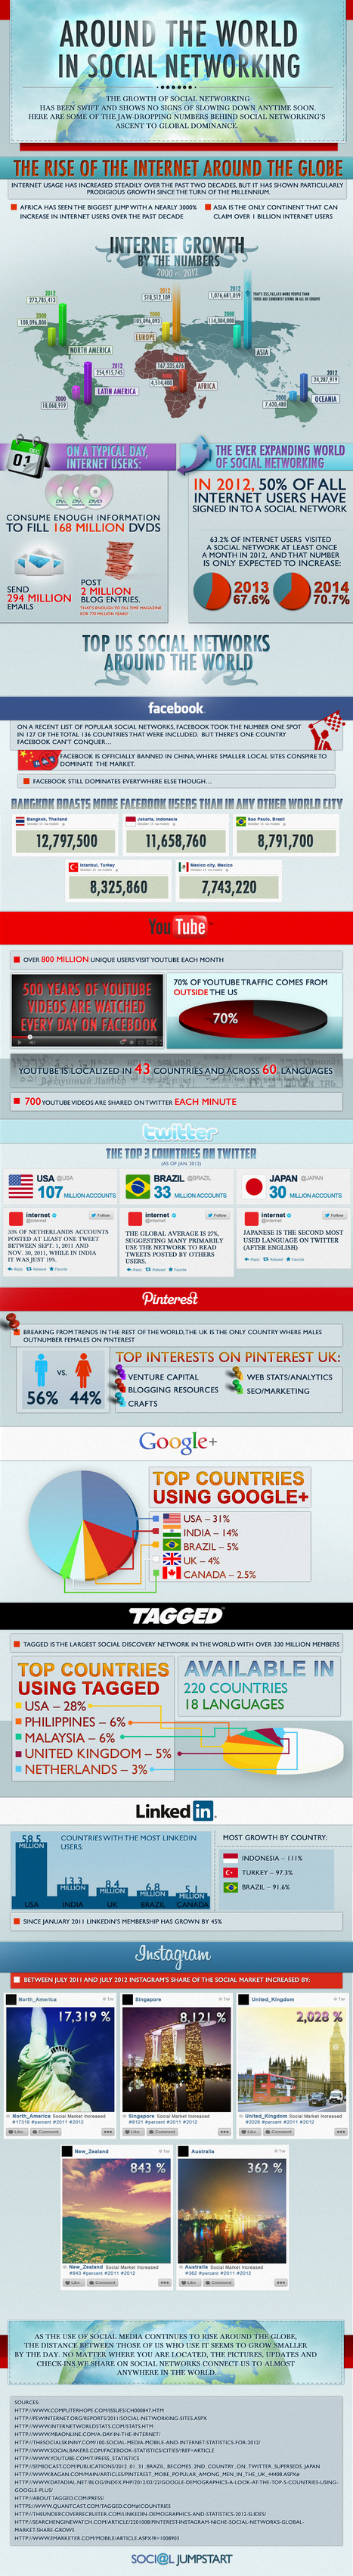 Facebook, Twitter, Pinterest, Instagram – How Big Is Social Media Around The World? - AllTwitter | iEduc@rt | Scoop.it